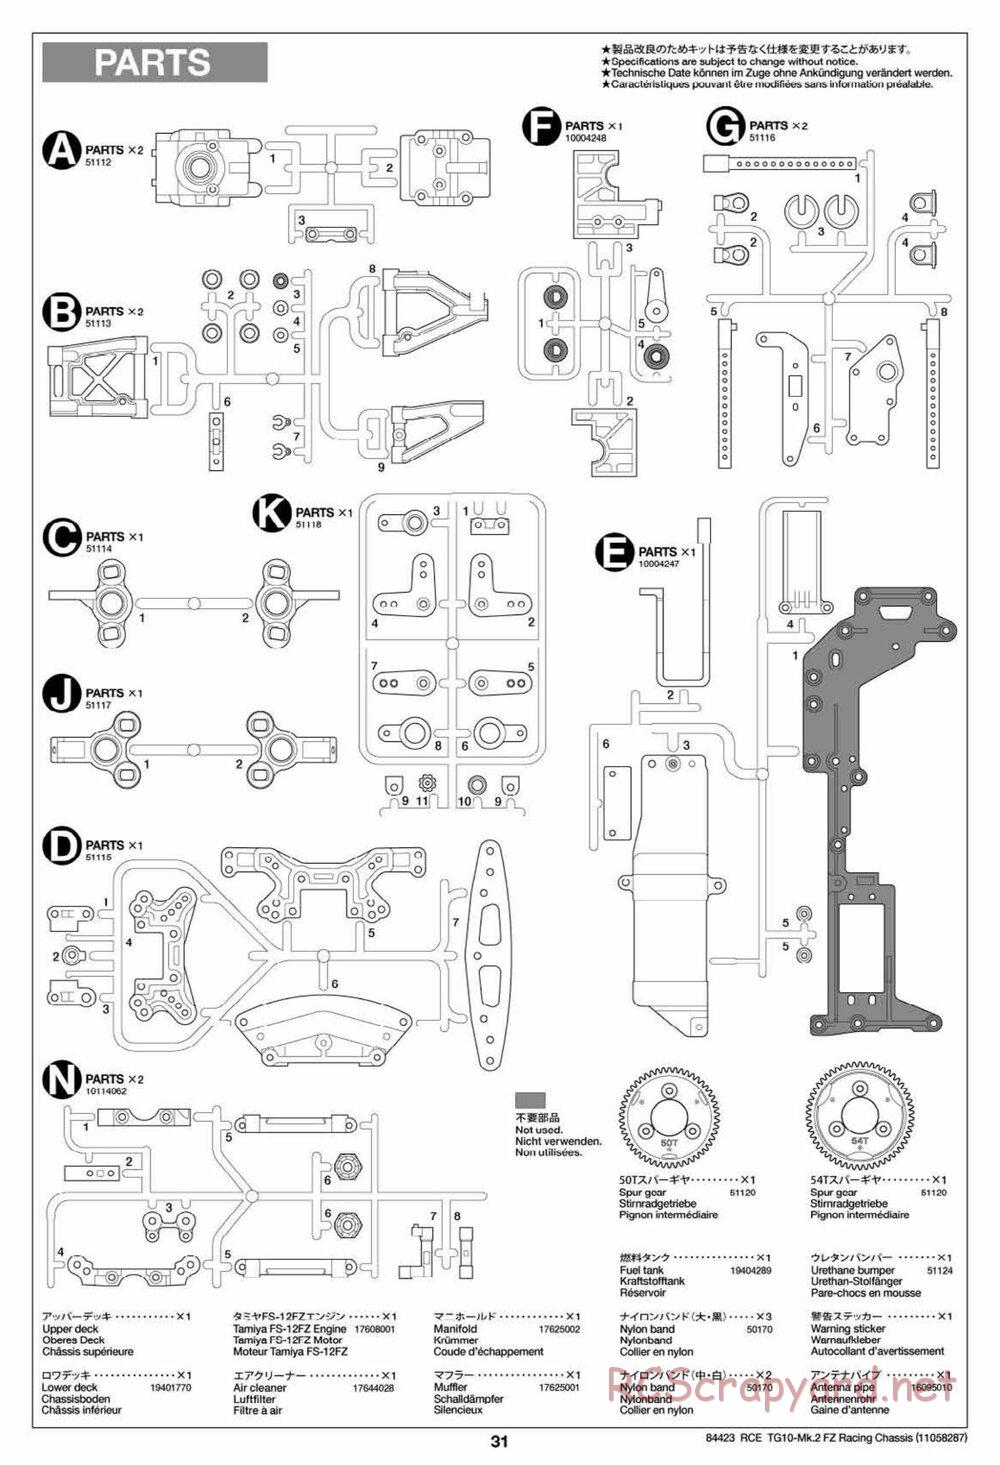 Tamiya - TG10 Mk.2 FZ Racing Chassis - Manual - Page 31